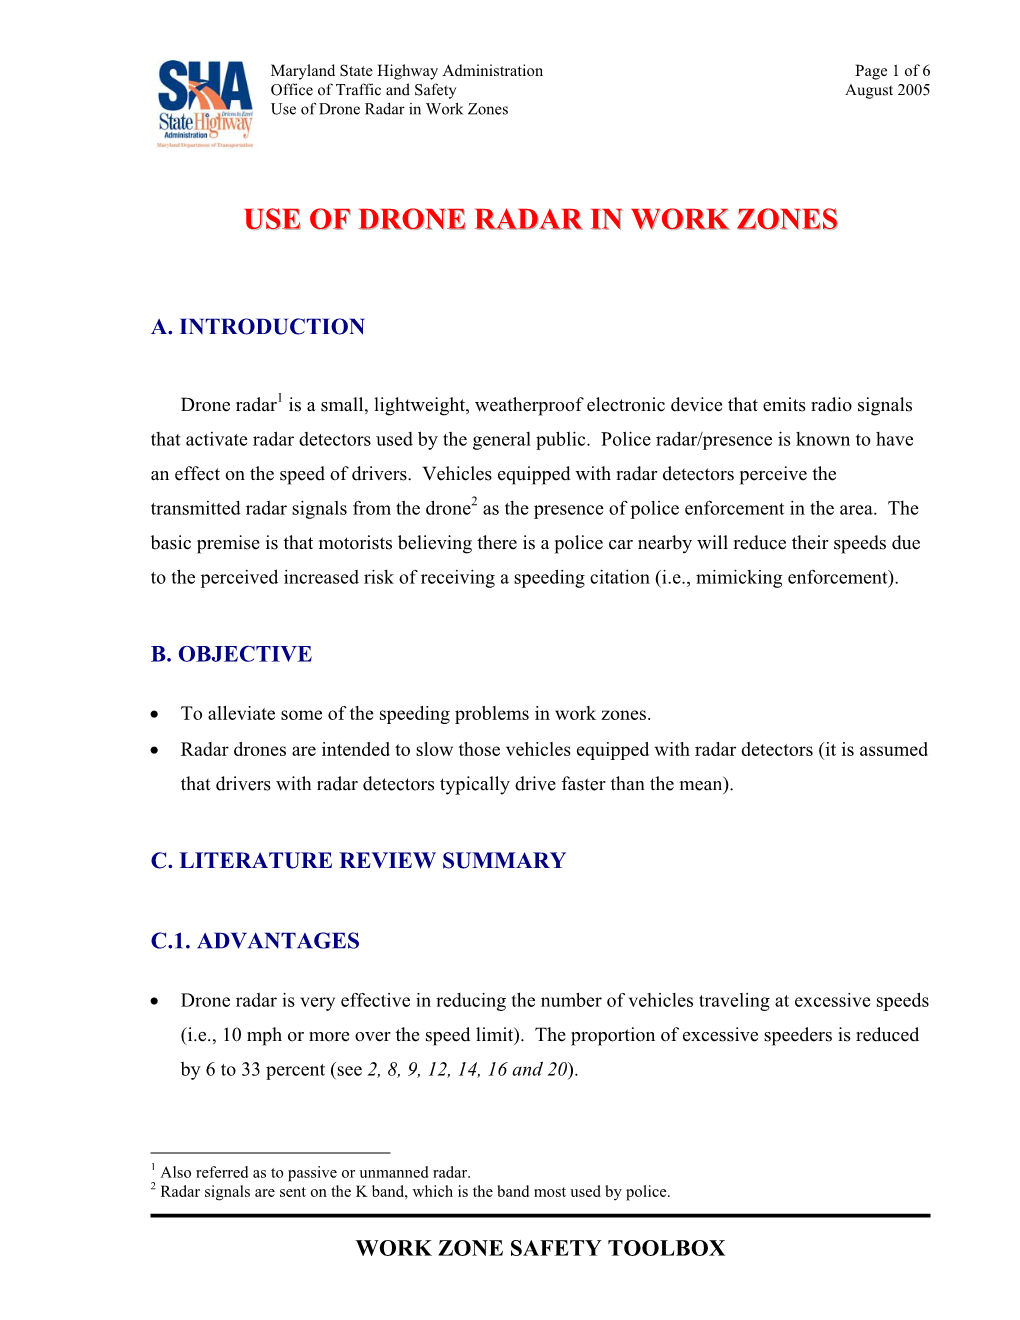 Use of Drone Radar in Work Zones